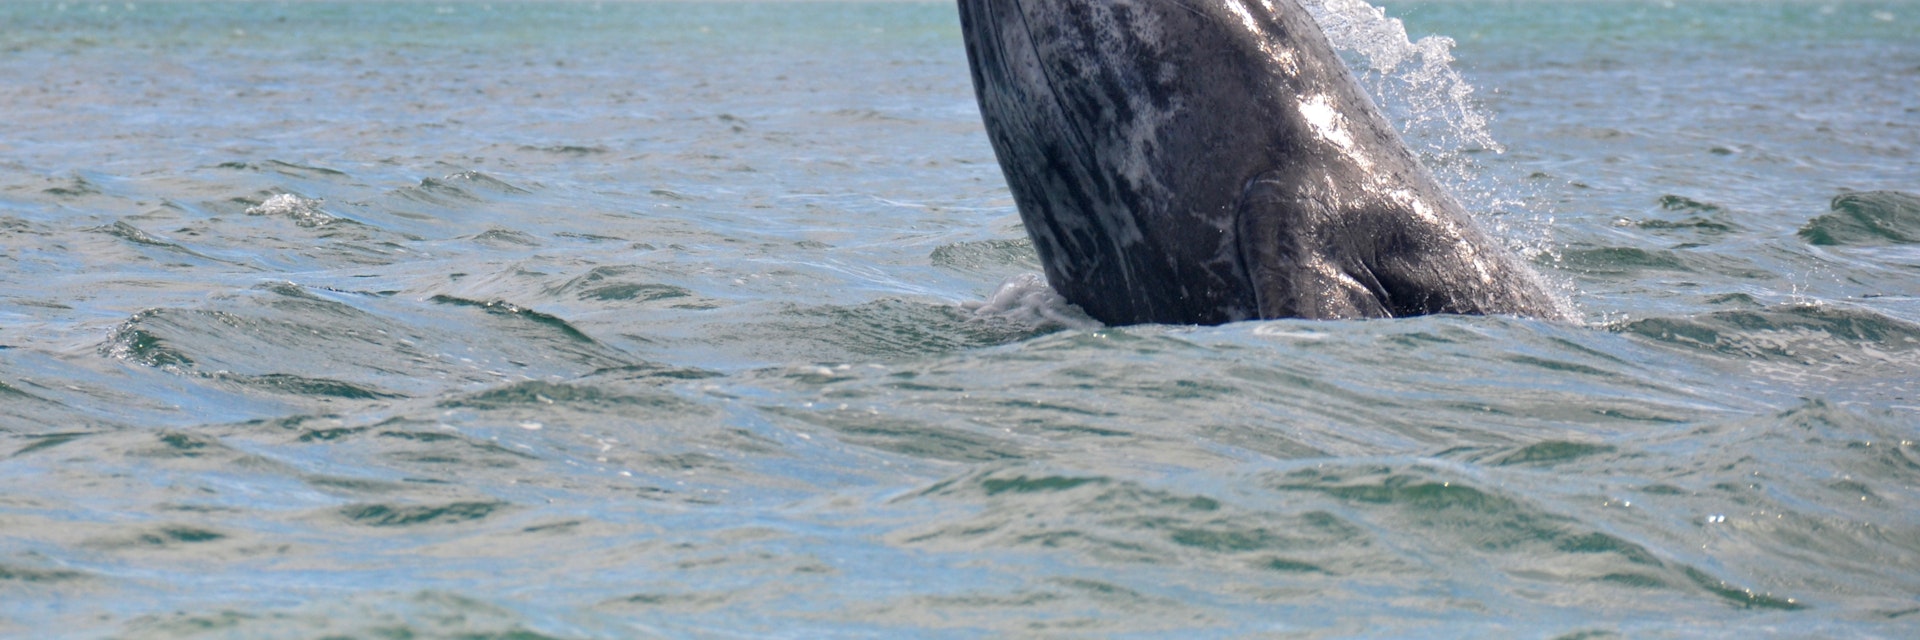 A gray whale breaches in San Ignacio Lagoon, Mexico.